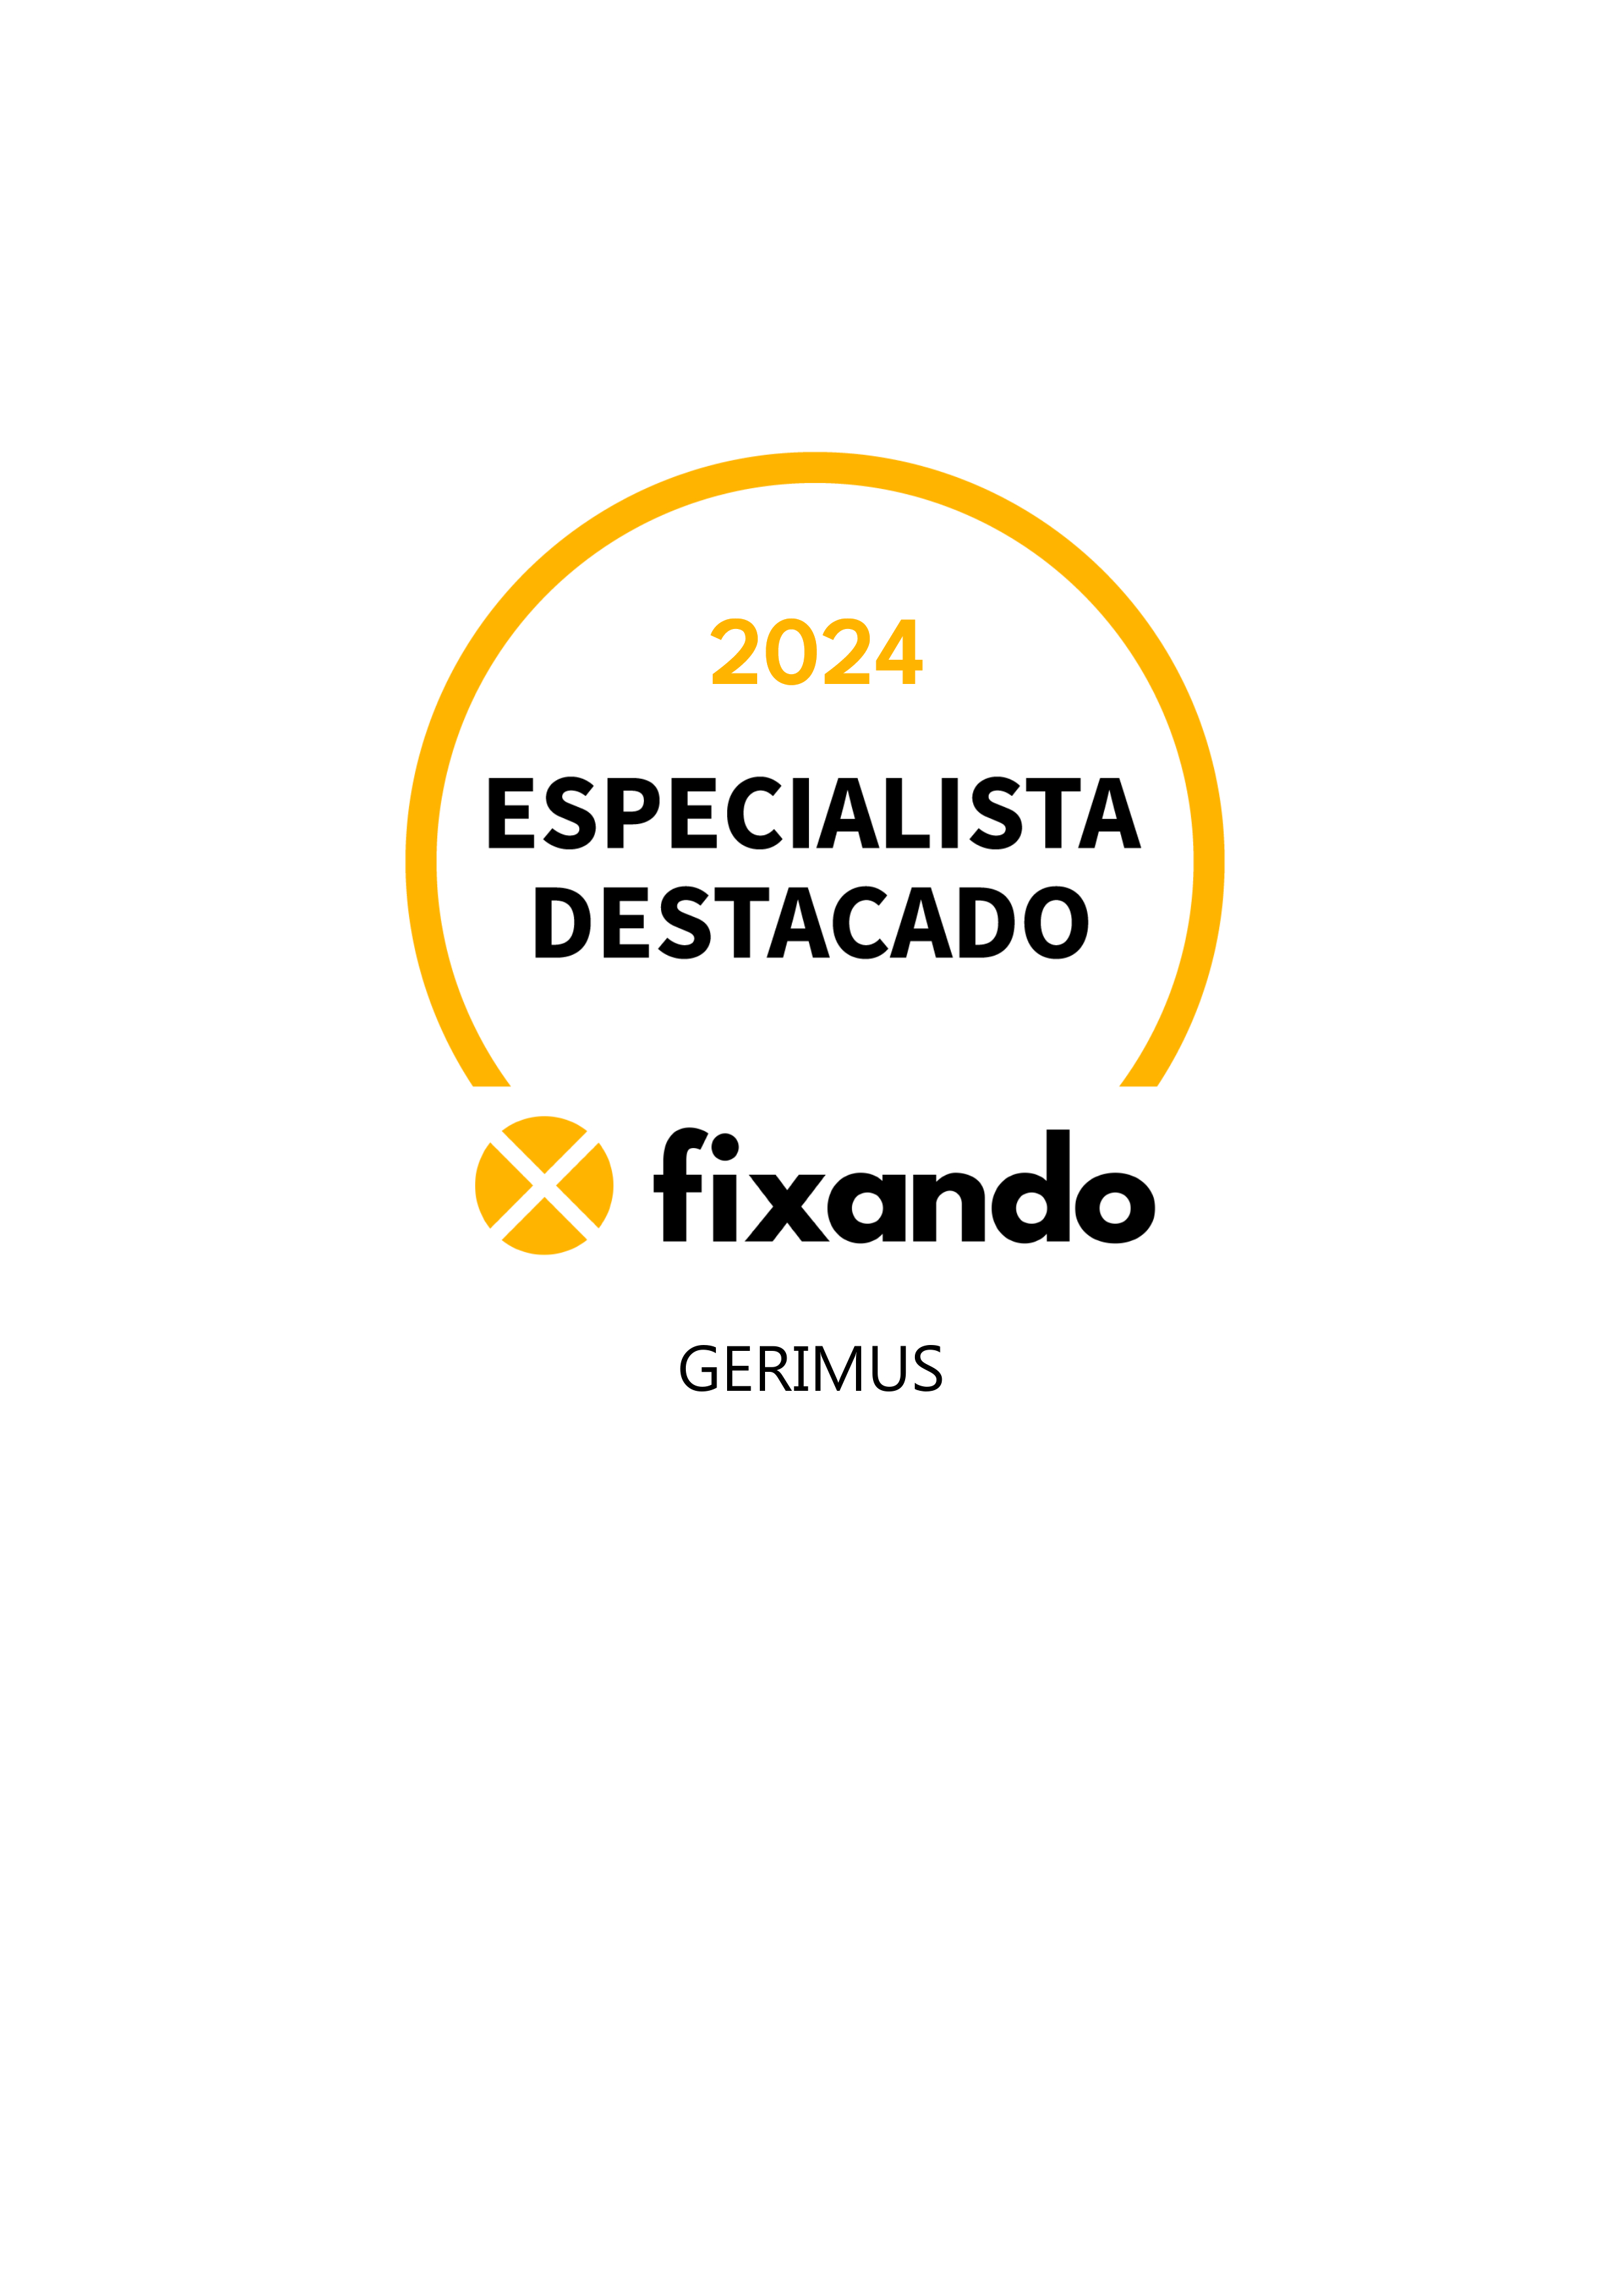 Gerimus - Vila Franca de Xira - Limpeza de Espaço Comercial